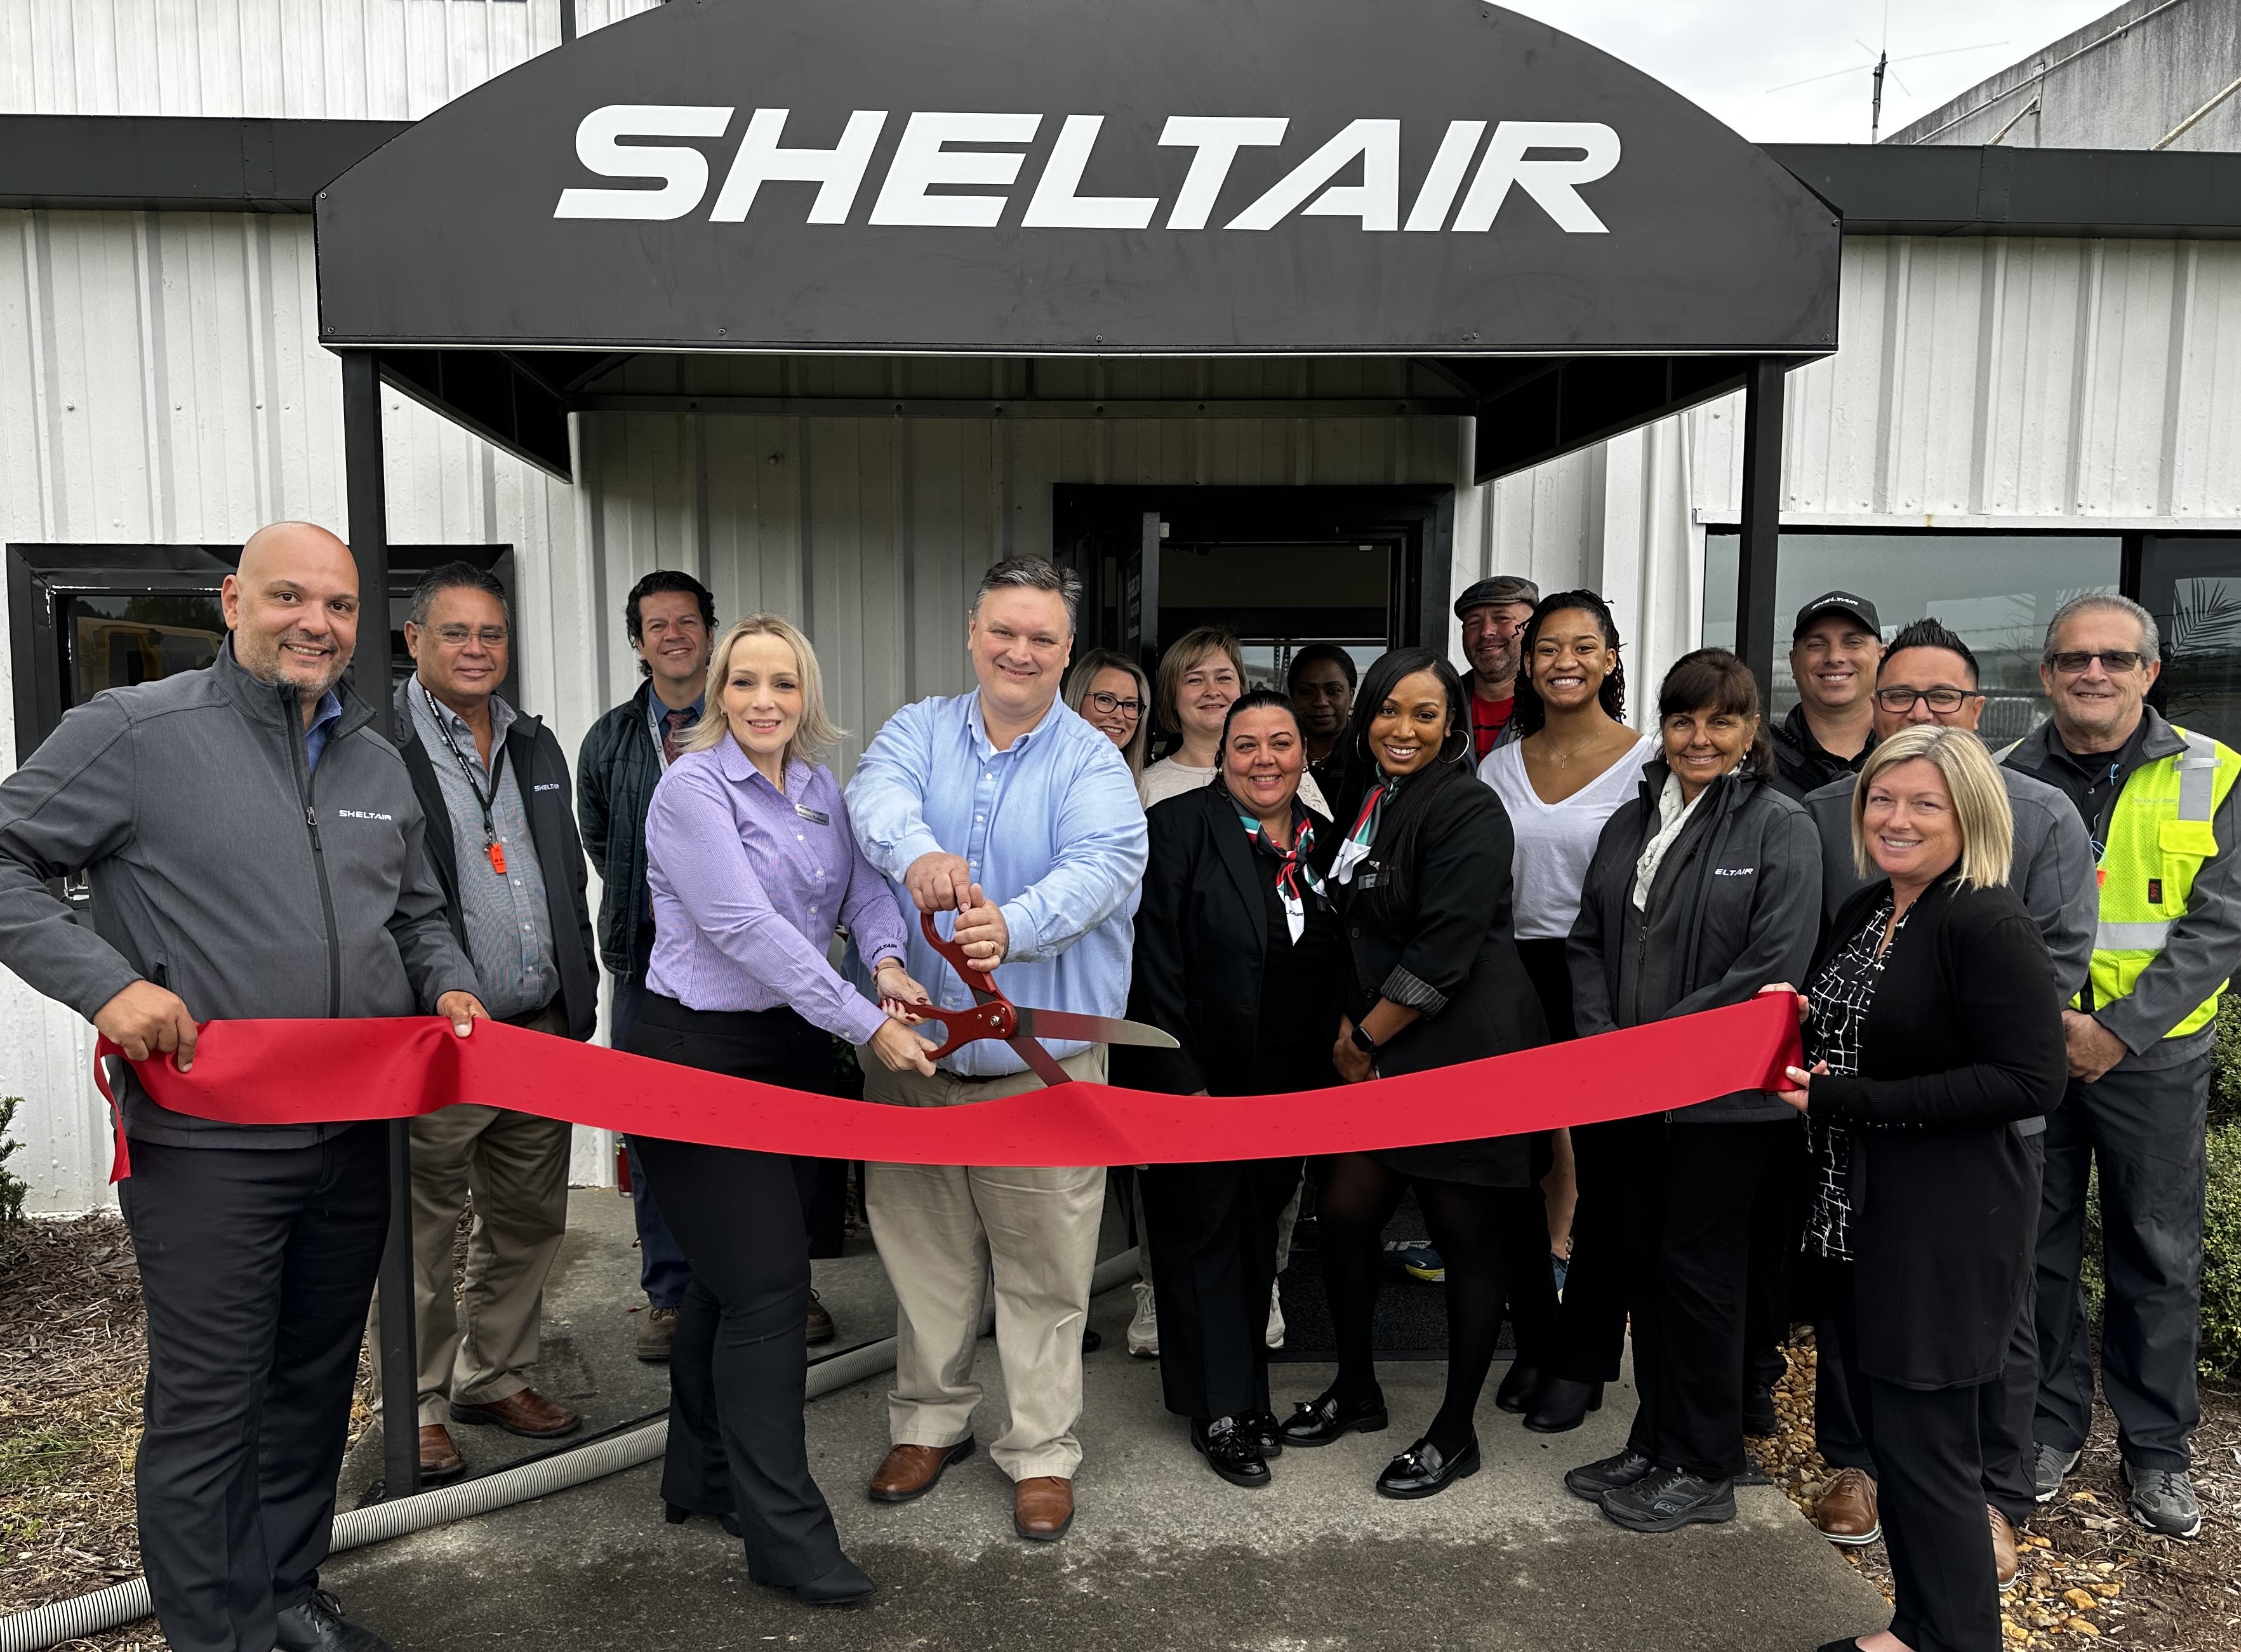 Sheltair’s latest FBO at Gwinnett County Airport joins Avfuel network